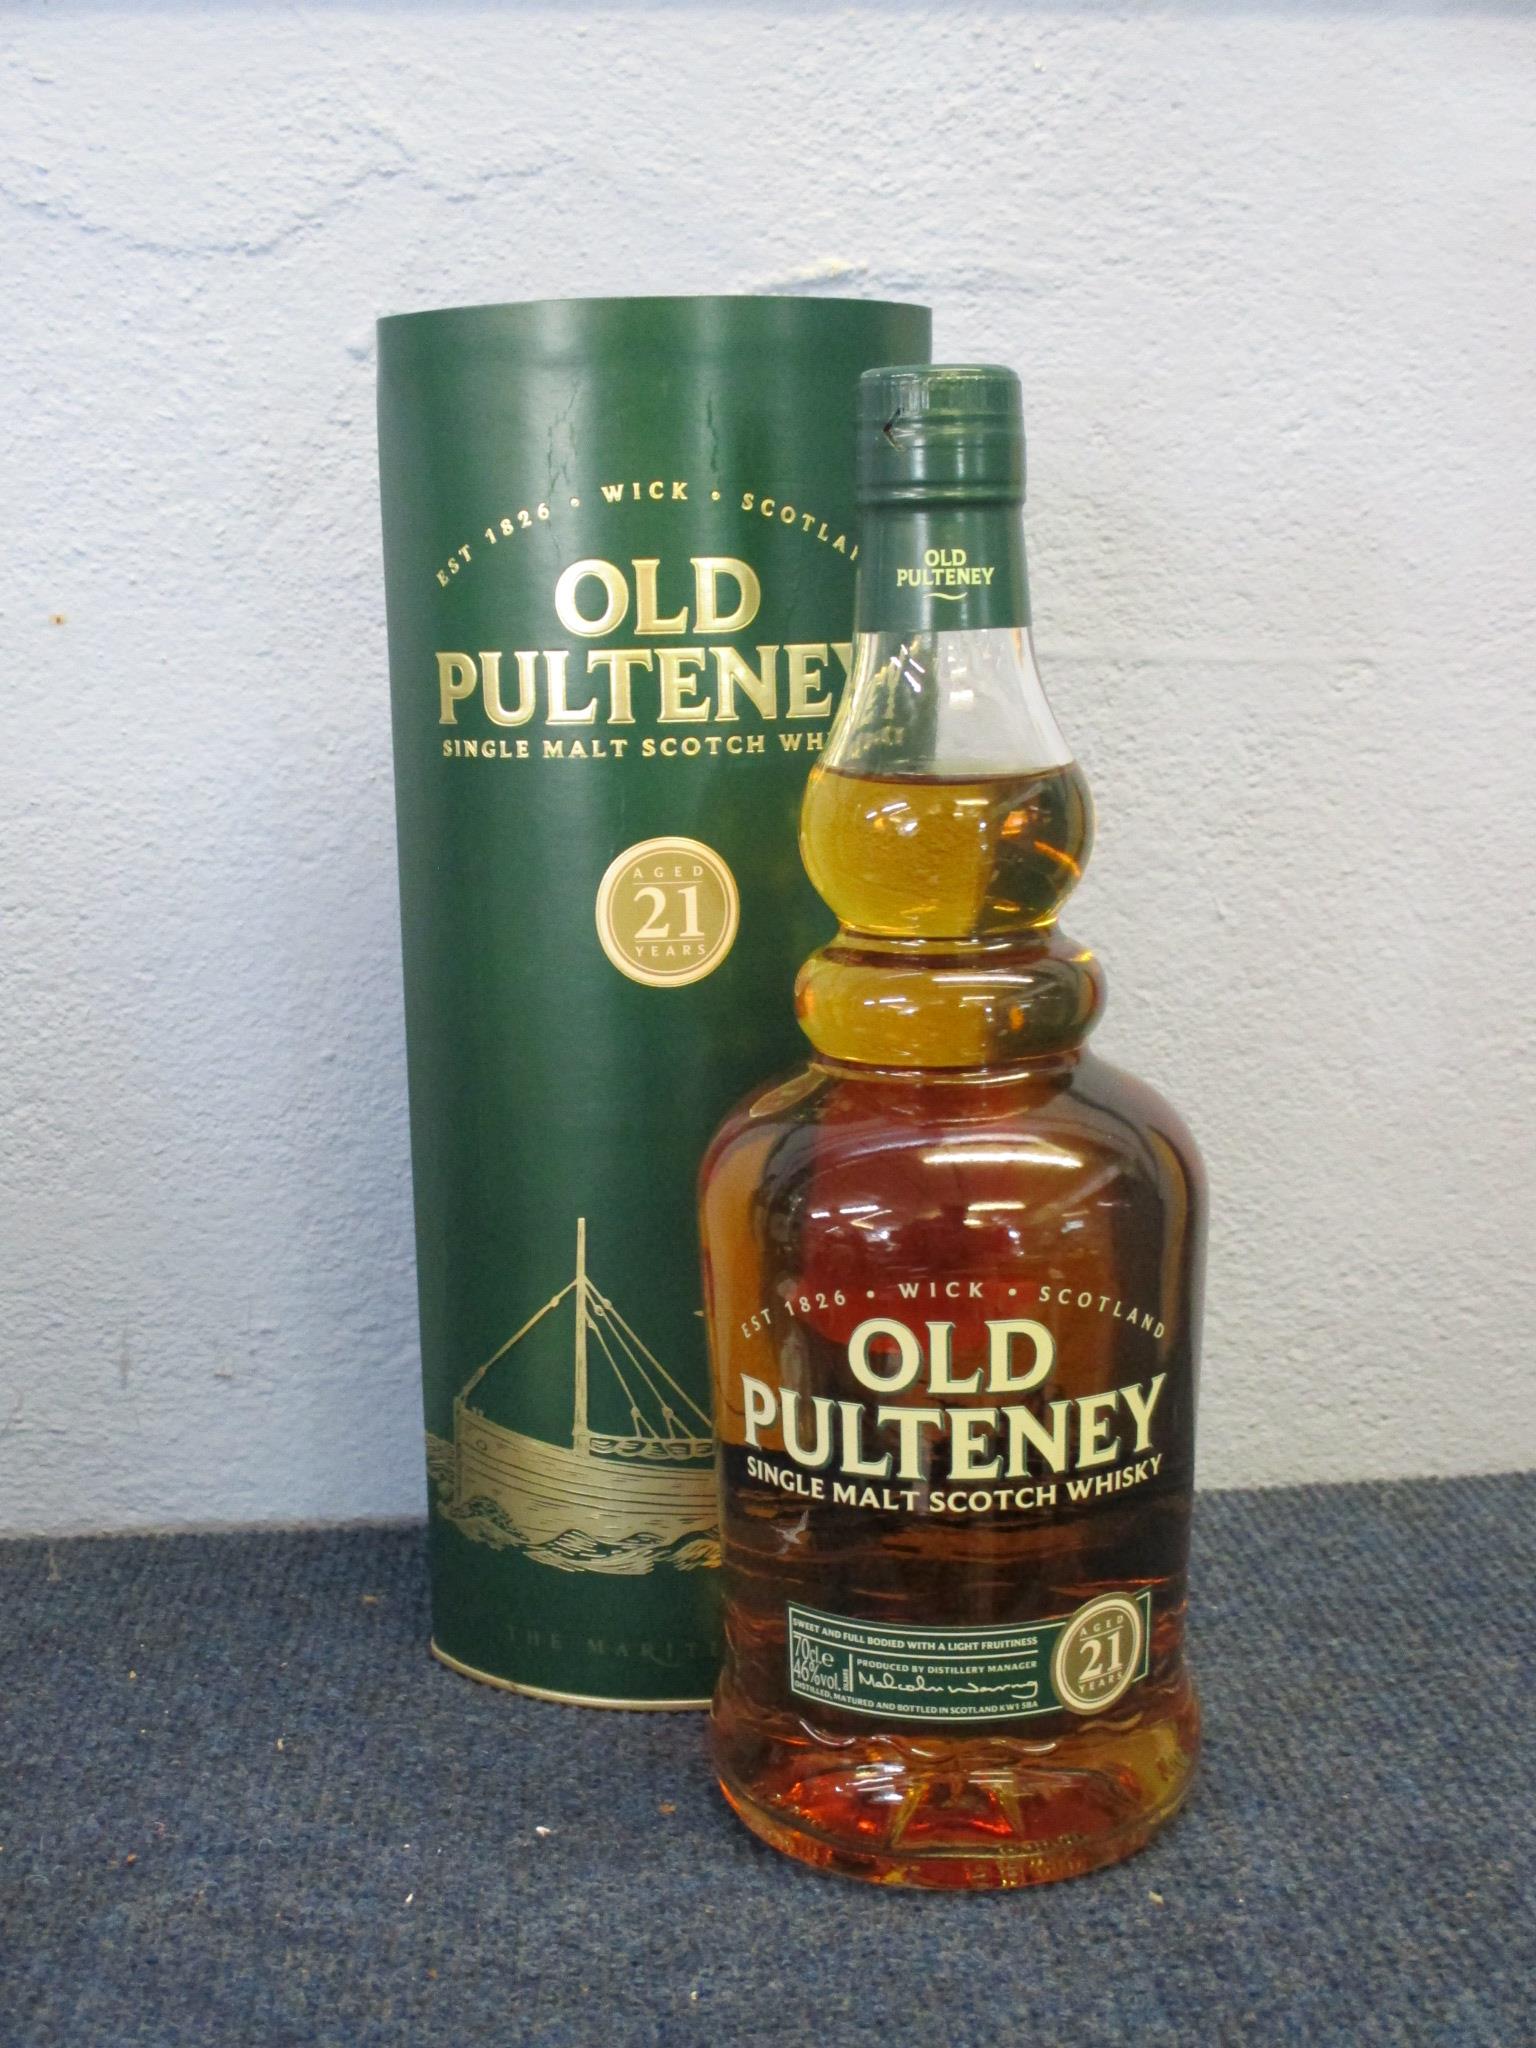 Old Pulteney Single Malt Scotch Whisky, 21yo, "The Maritime Malt", 70cl, 46% vol in carton